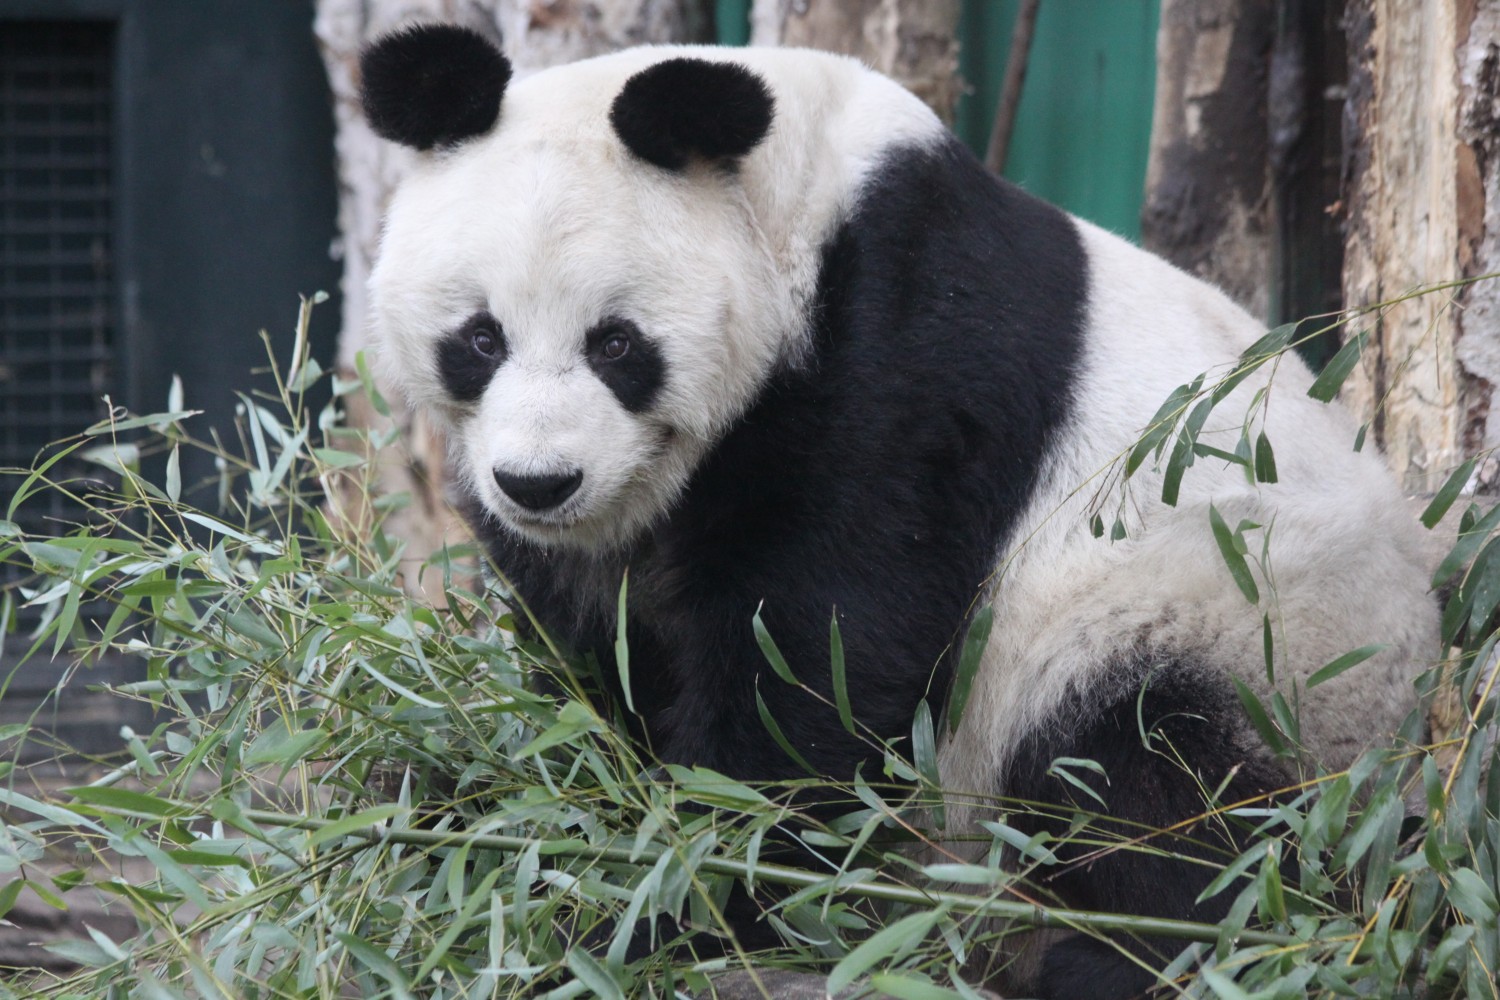 Buy panda. Берлинский зоопарк китайские панды. Панда Живая. Панда Панда живет в Китае. В финском зоопарке панды.